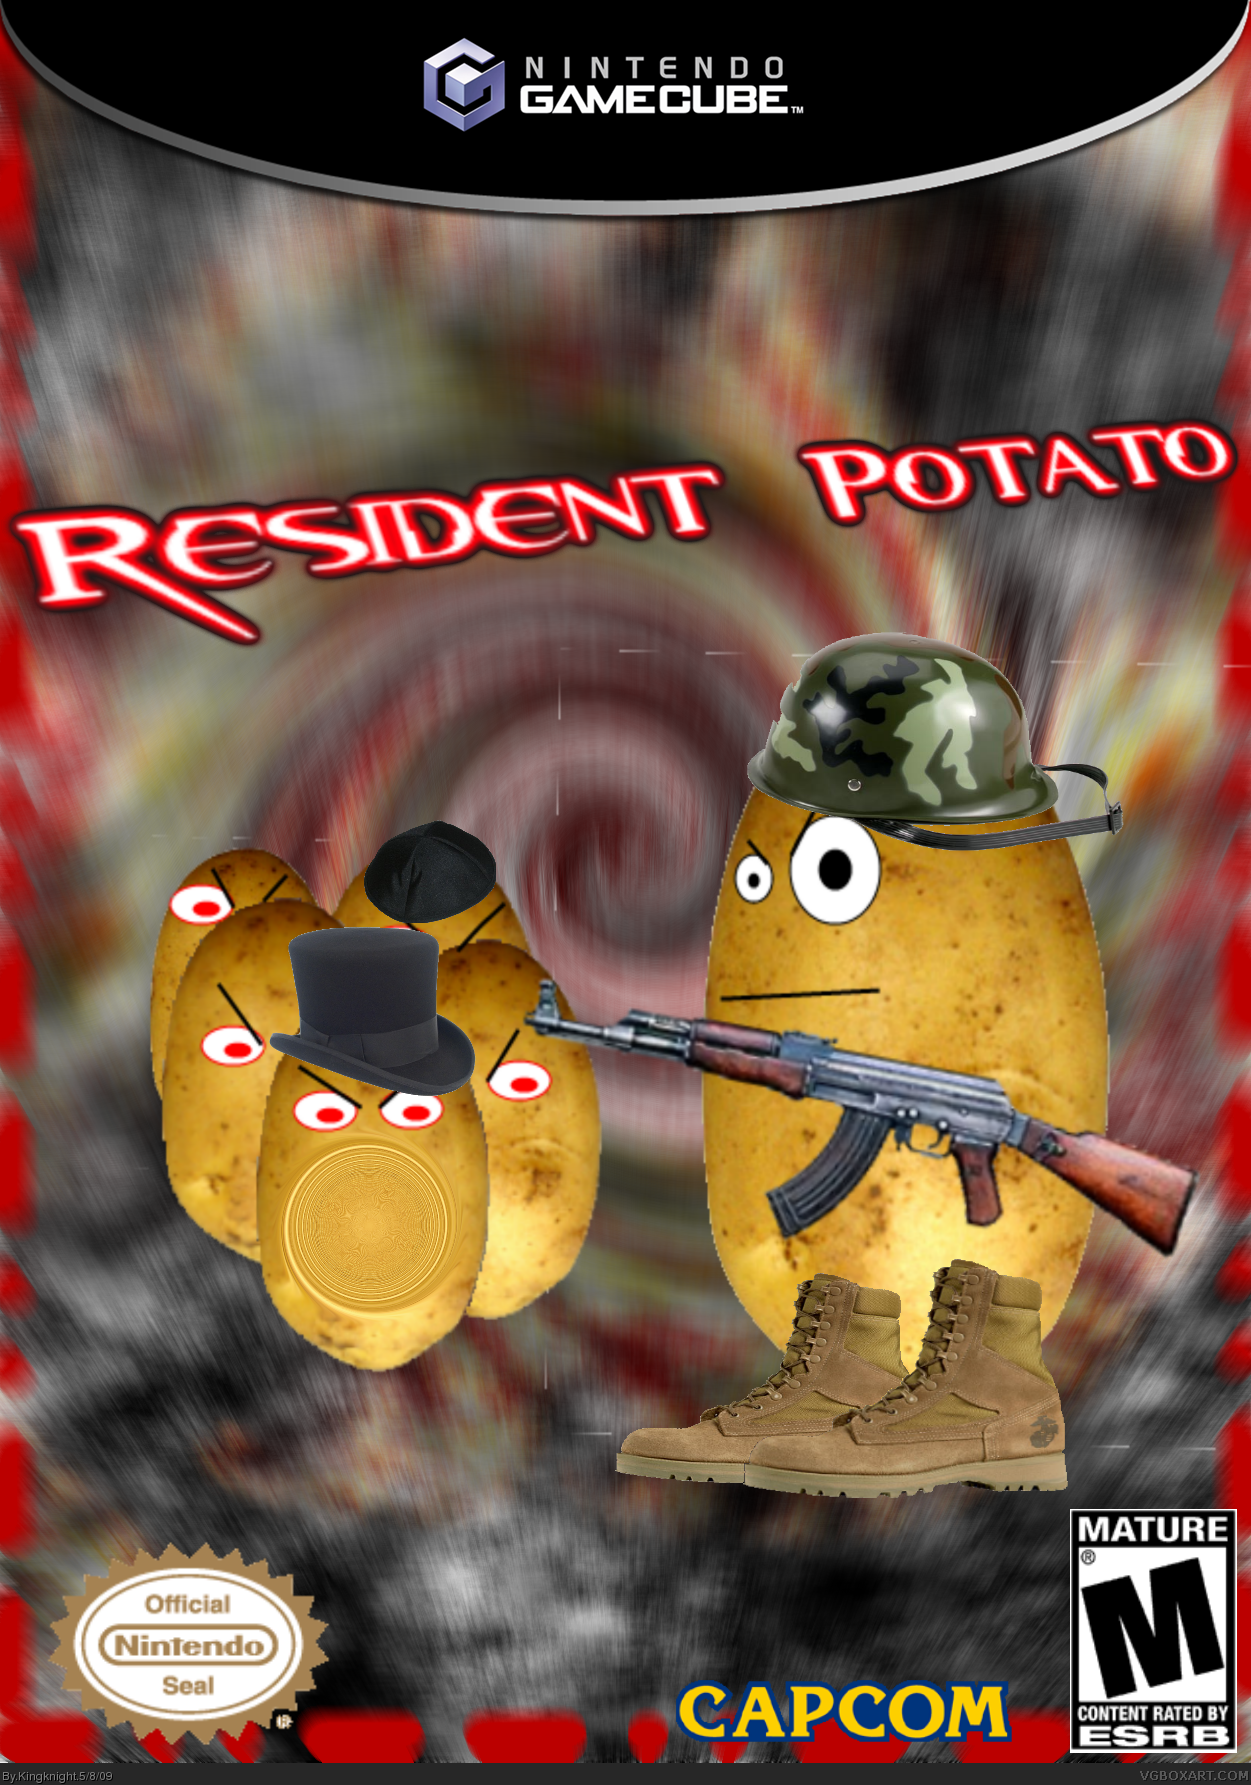 Resident Potato box cover